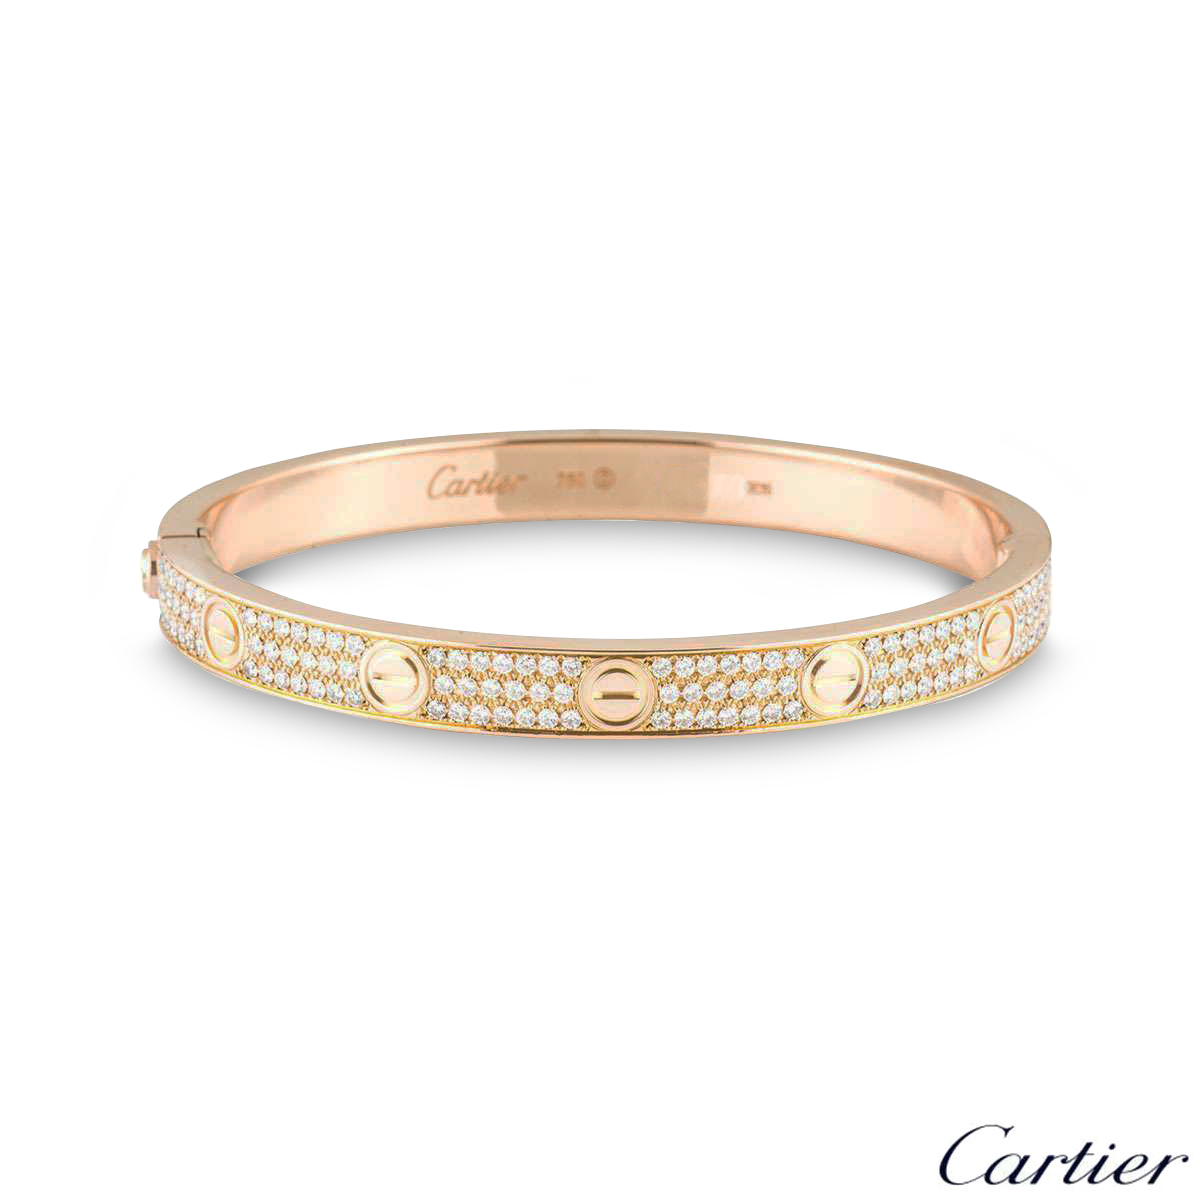 Cartier Rose Gold Full Pave Diamond Love Bracelet Size 18 N6036918 ...